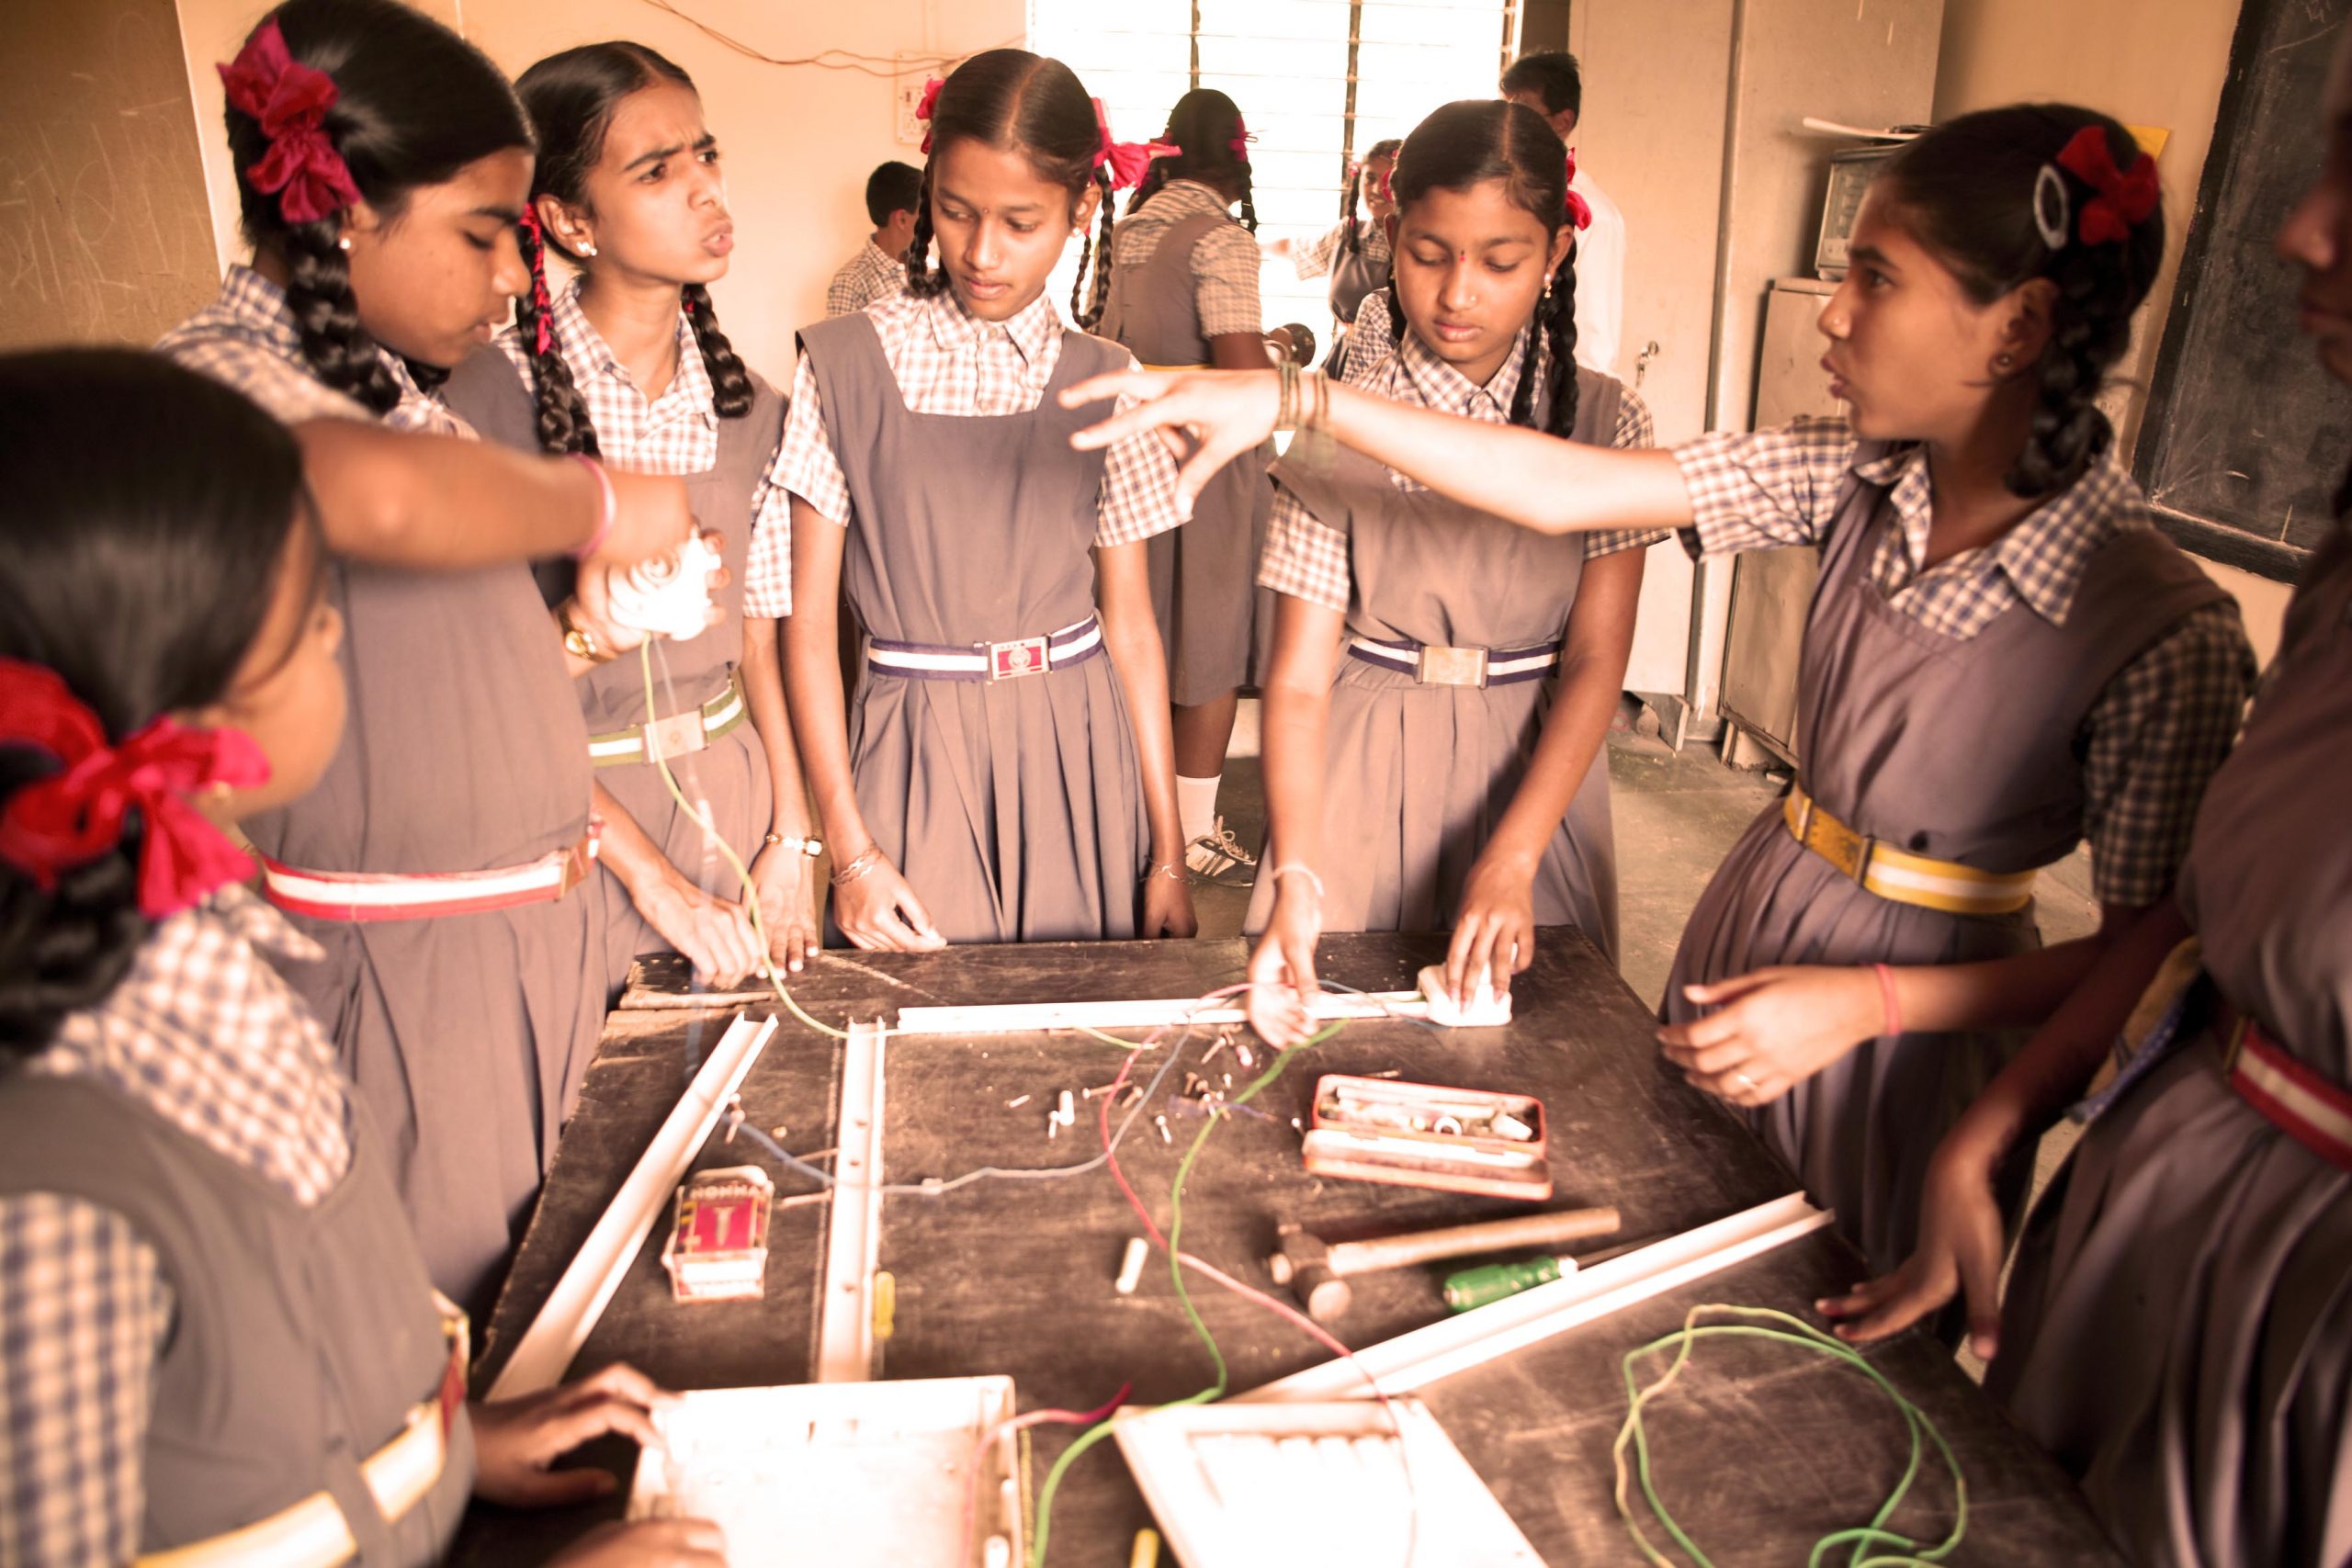 Indian schoolgirls in uniform working as a group